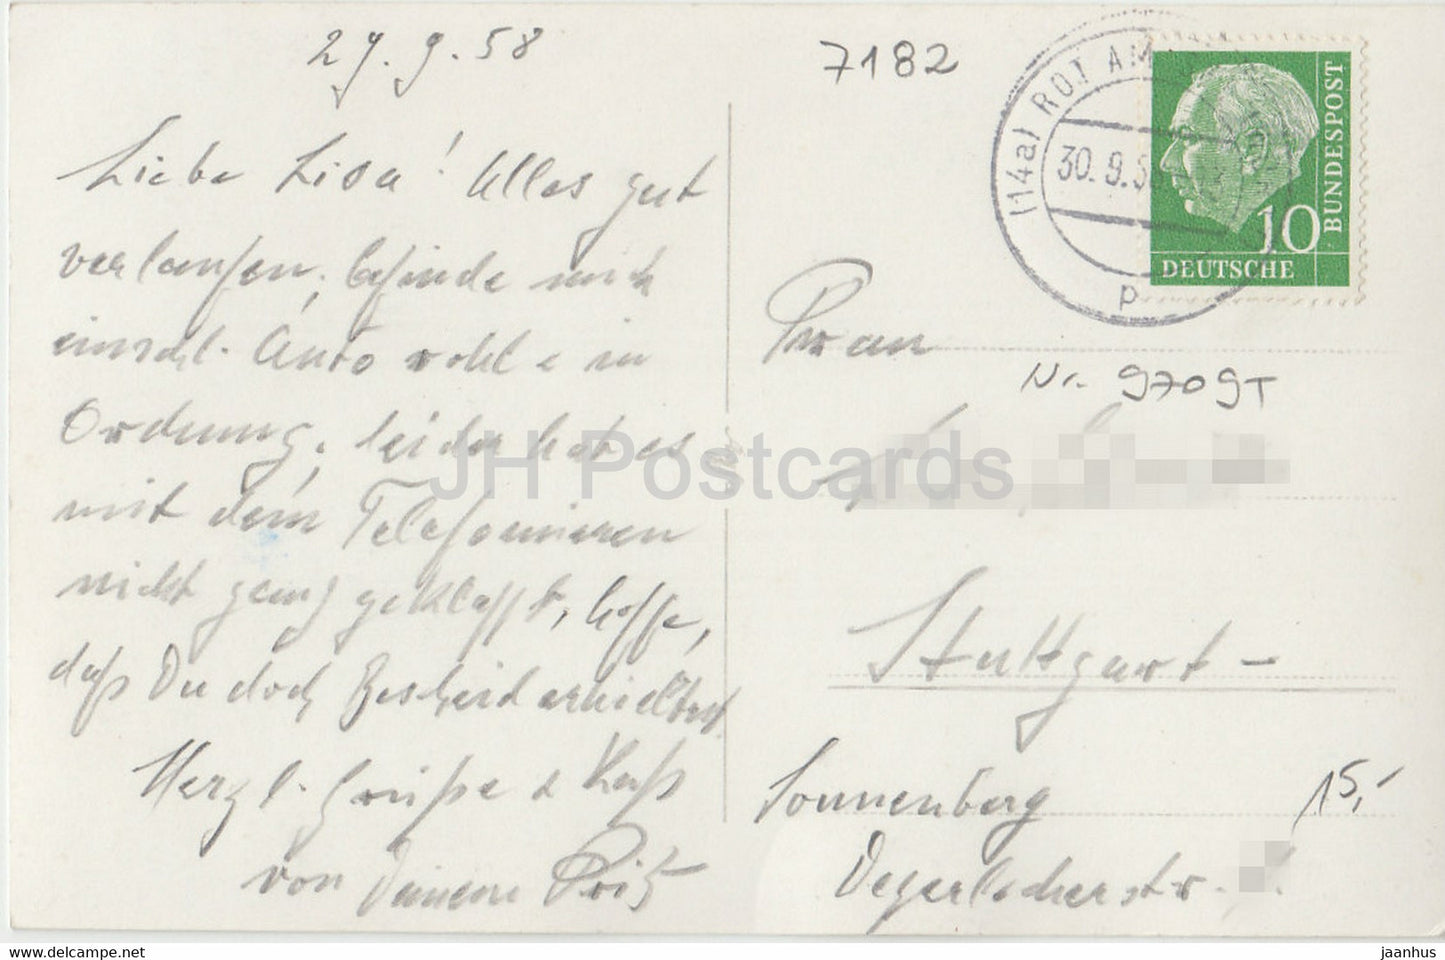 Amlishagen - Kreis Gerabronn - 154397 - carte postale ancienne - 1958 - Allemagne - utilisé